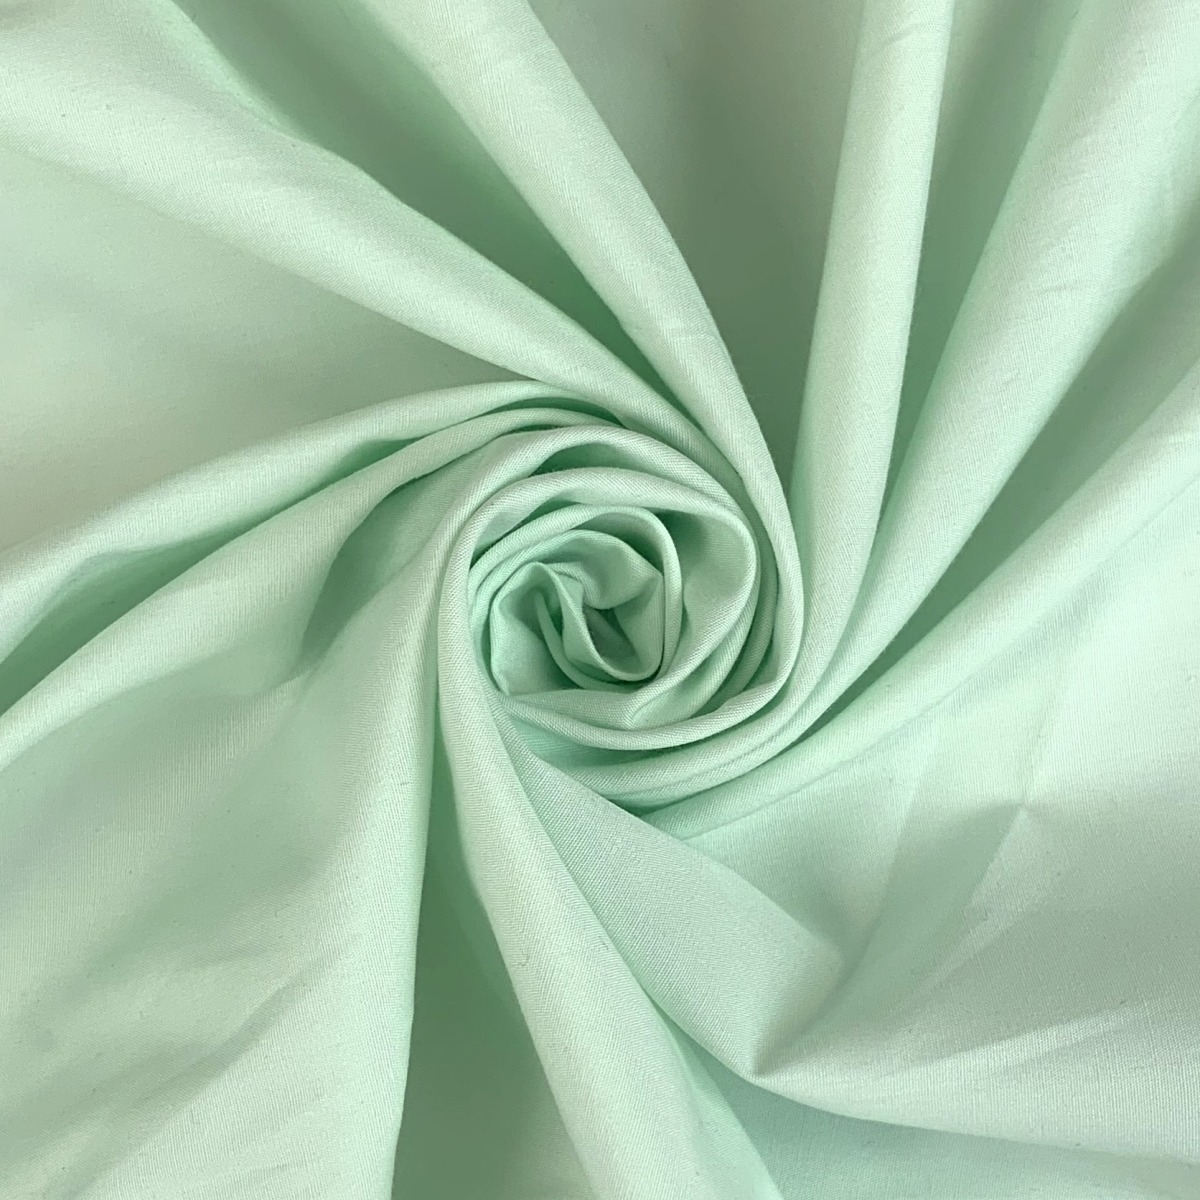 Mint Green Cotton Fabric